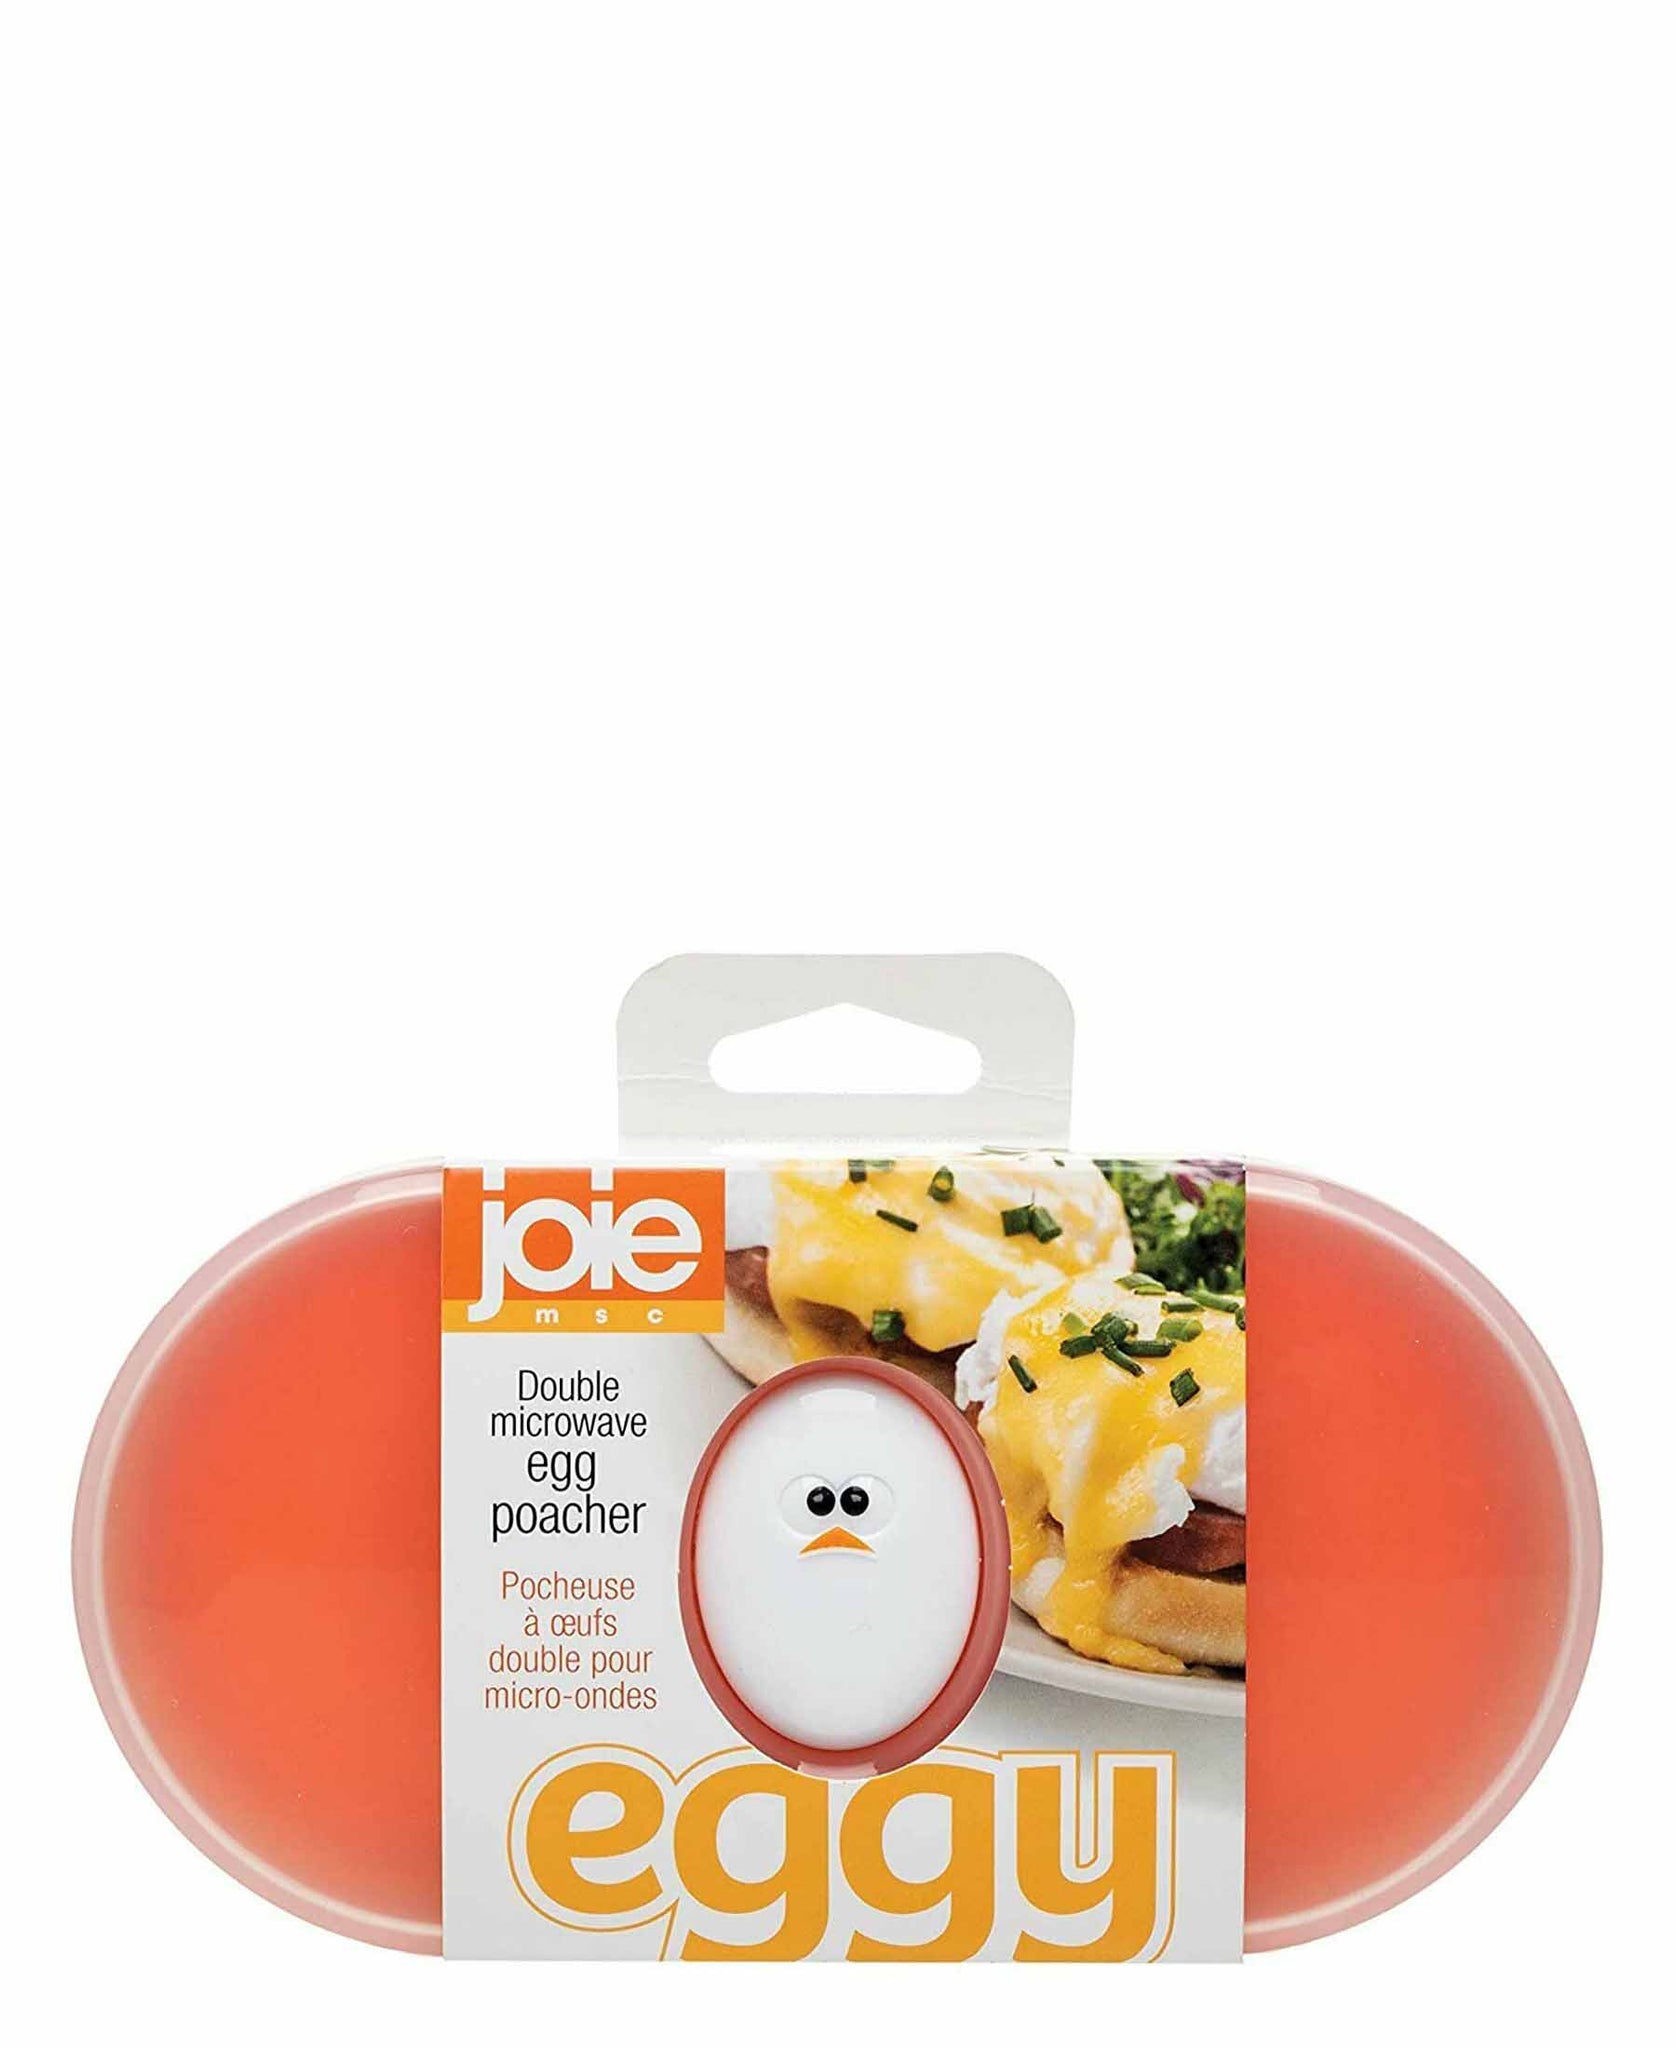 Joie Non-Stick Double Microwave Egg Poacher - Orange